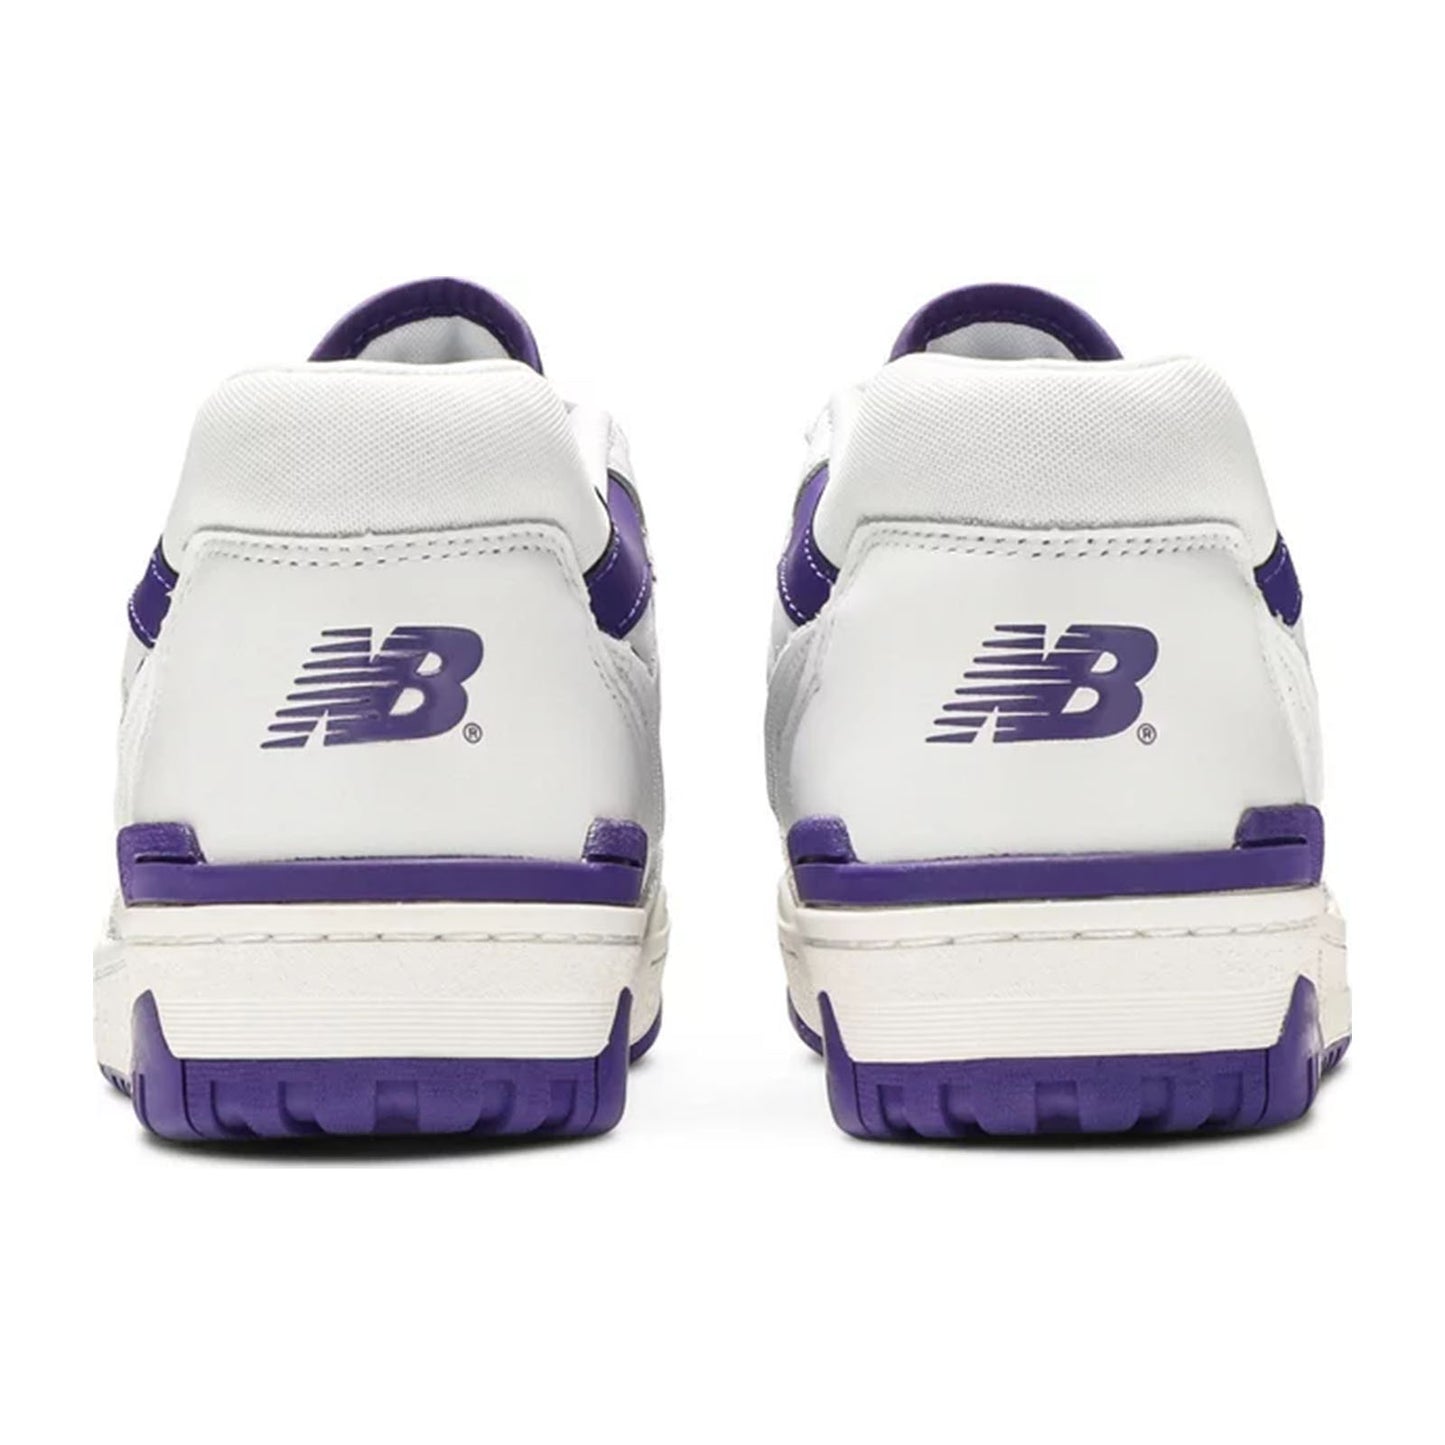 New Balance 550, White Purple